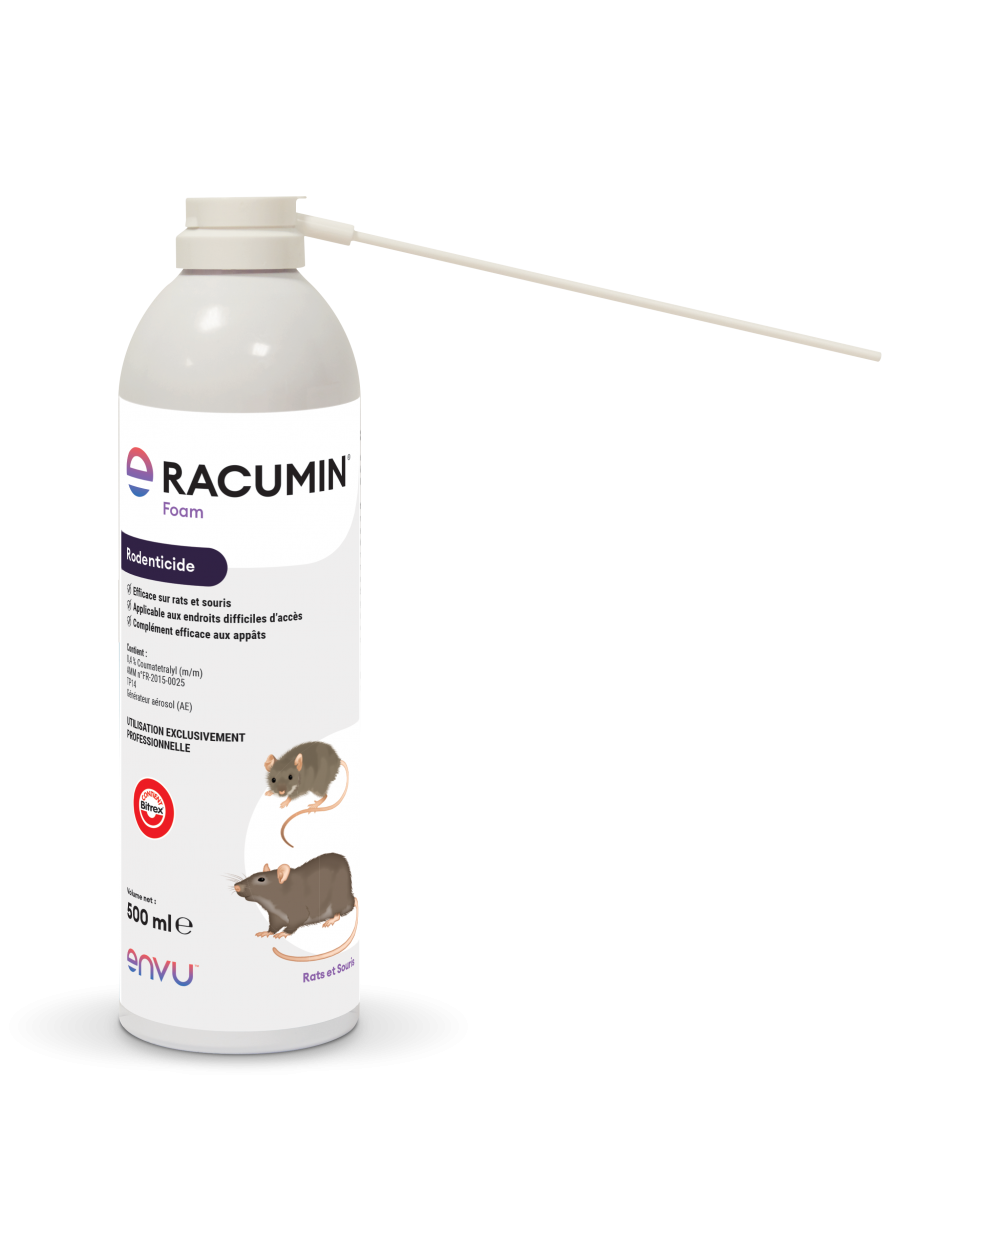 Racumin Foam - Produit anti rat professionnel